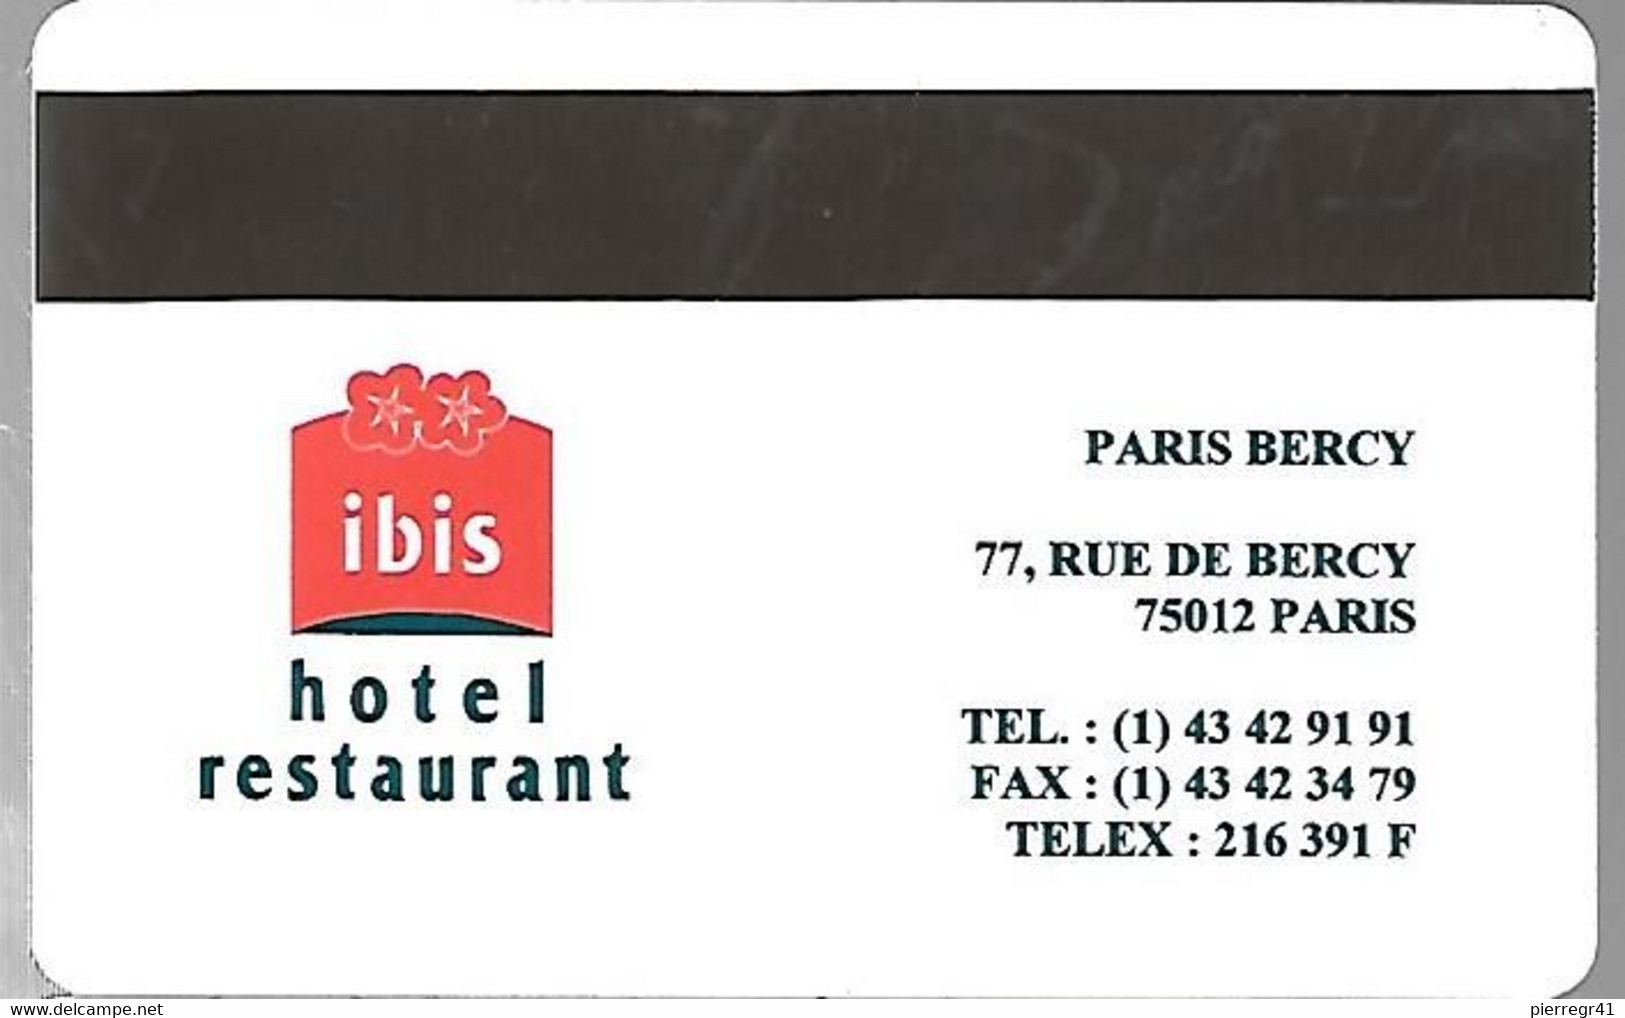 CLE-MAGNETIQUE-HOTEL-IBIS-PARIS BERCY-Restaurant-TBE/RARE - Hotel Key Cards